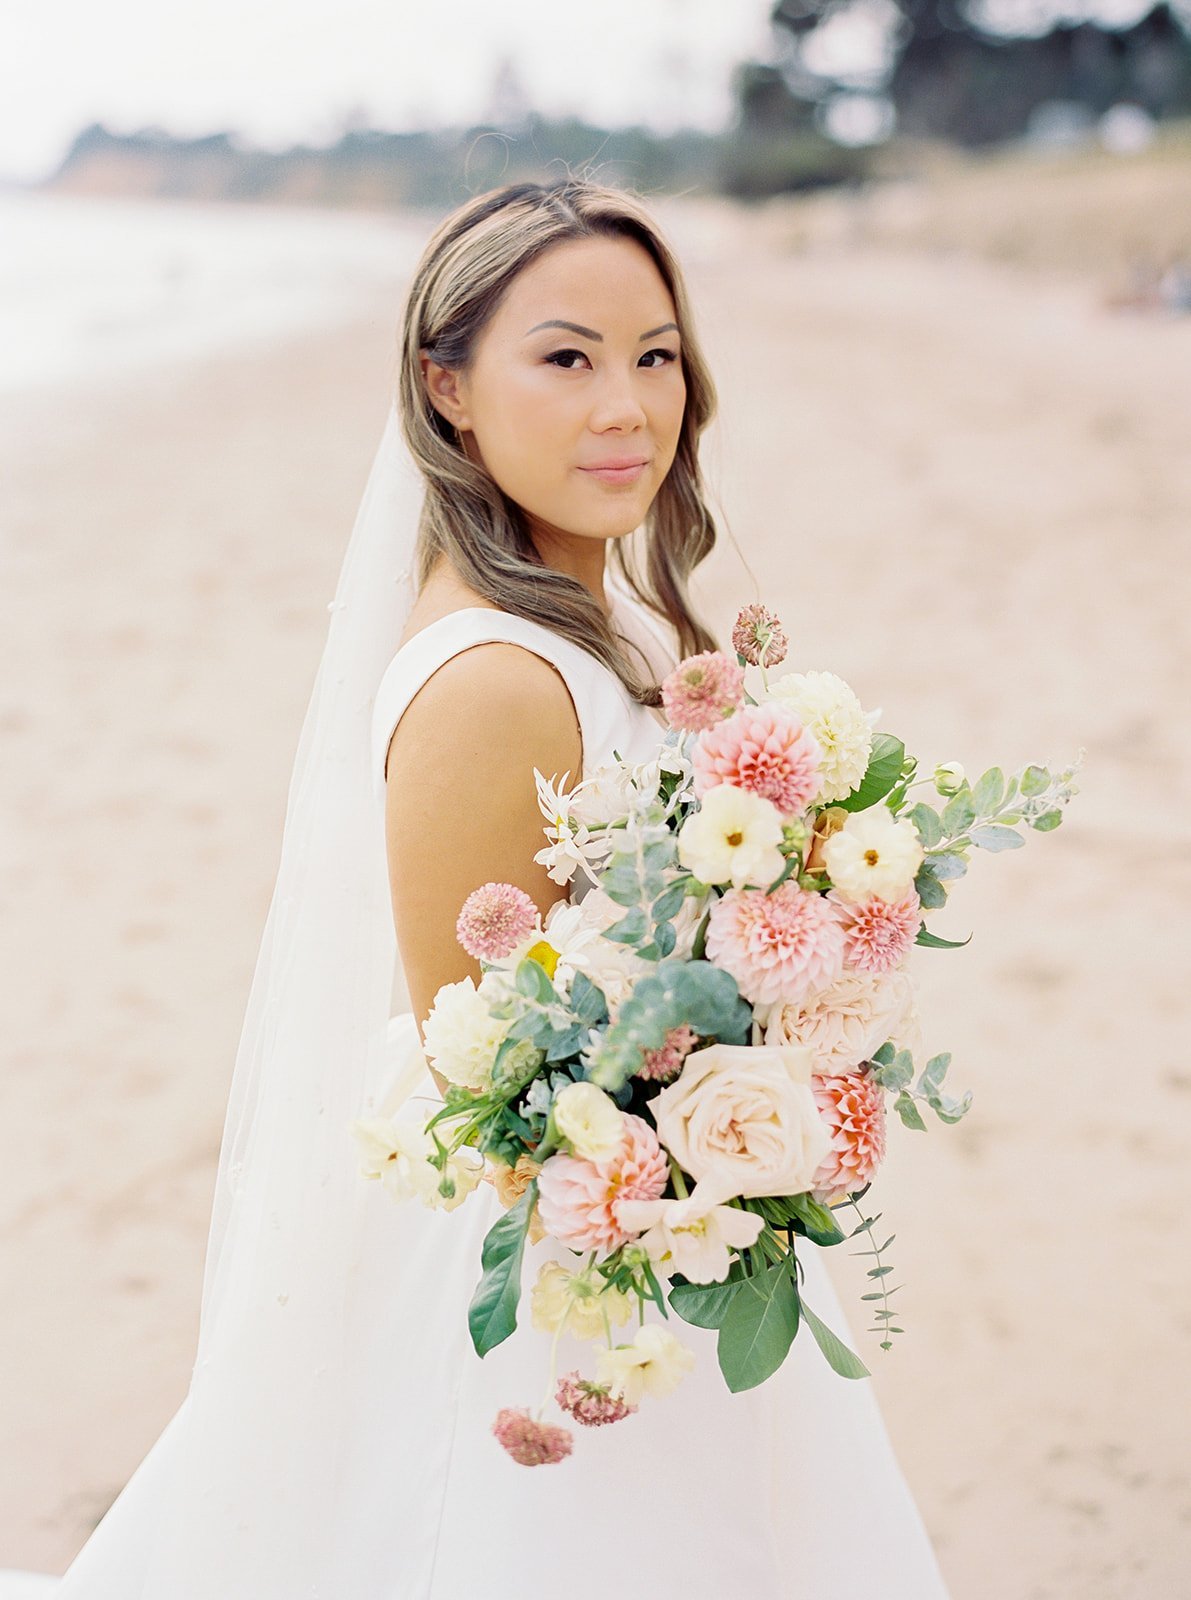 www.santabarbarawedding.com | Kelsey Rae Designs | Dani Toscano | Alexis Ireland Florals | Jenny Yoo | 805 Makeup | Andrea Villa | The Bride with Bouquet on the Beach